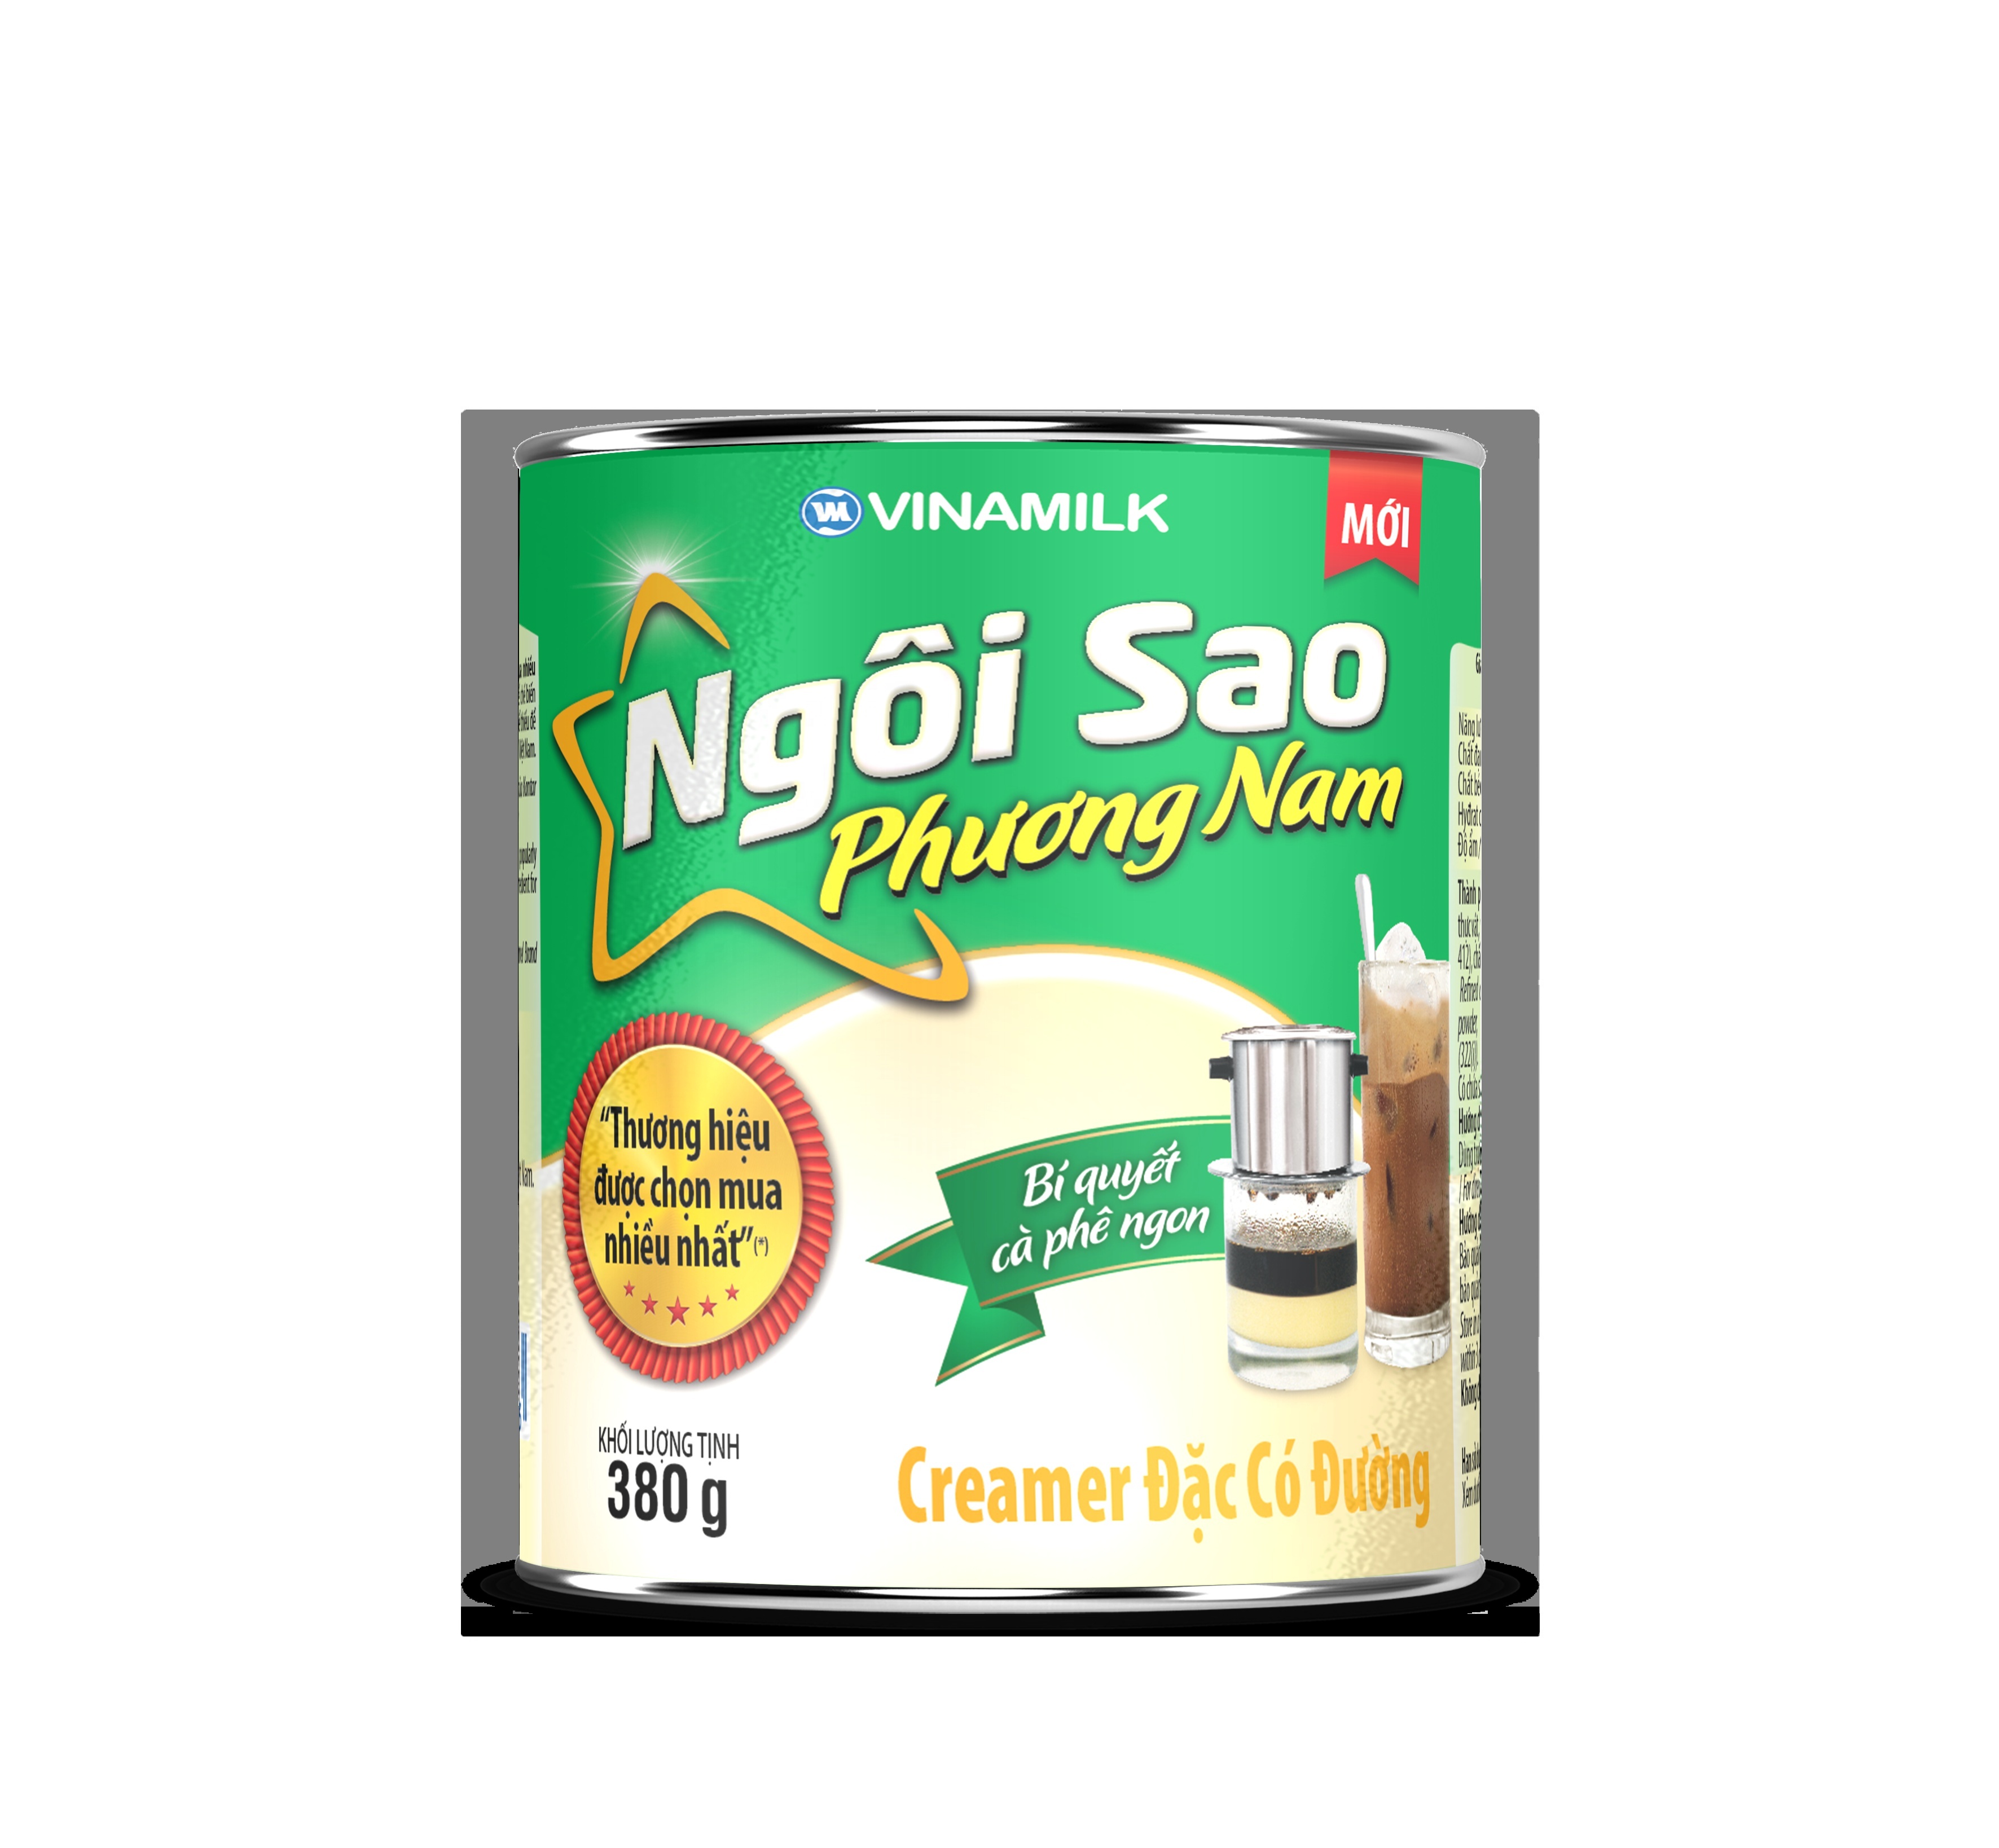 Sweetened Condensed Milk for Vietnamese coffee milk -Vinamilk- Southern Star brand - Green Label - 380g x 48 tins per carton GMP